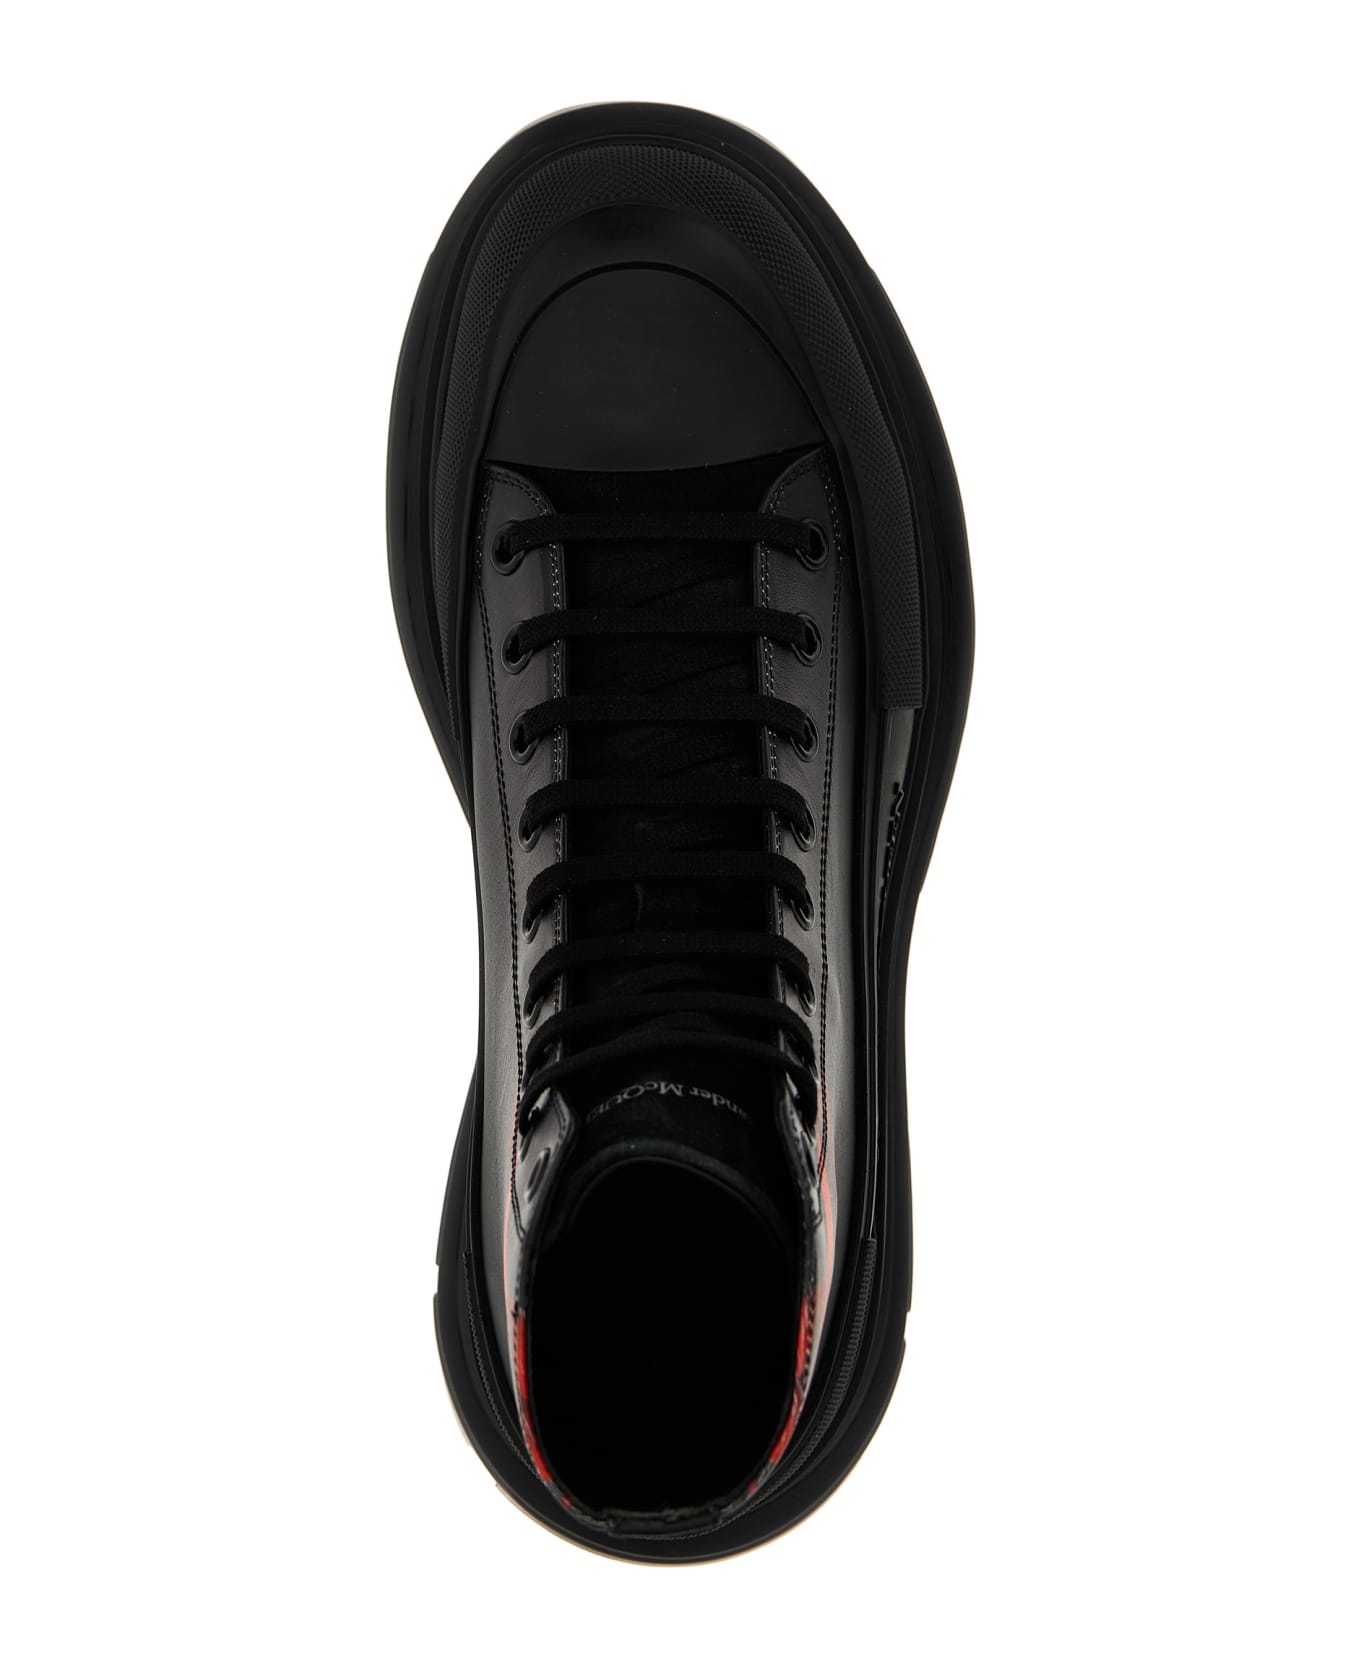 Alexander McQueen 'tread Slick' Ankle Boots - Black ブーツ